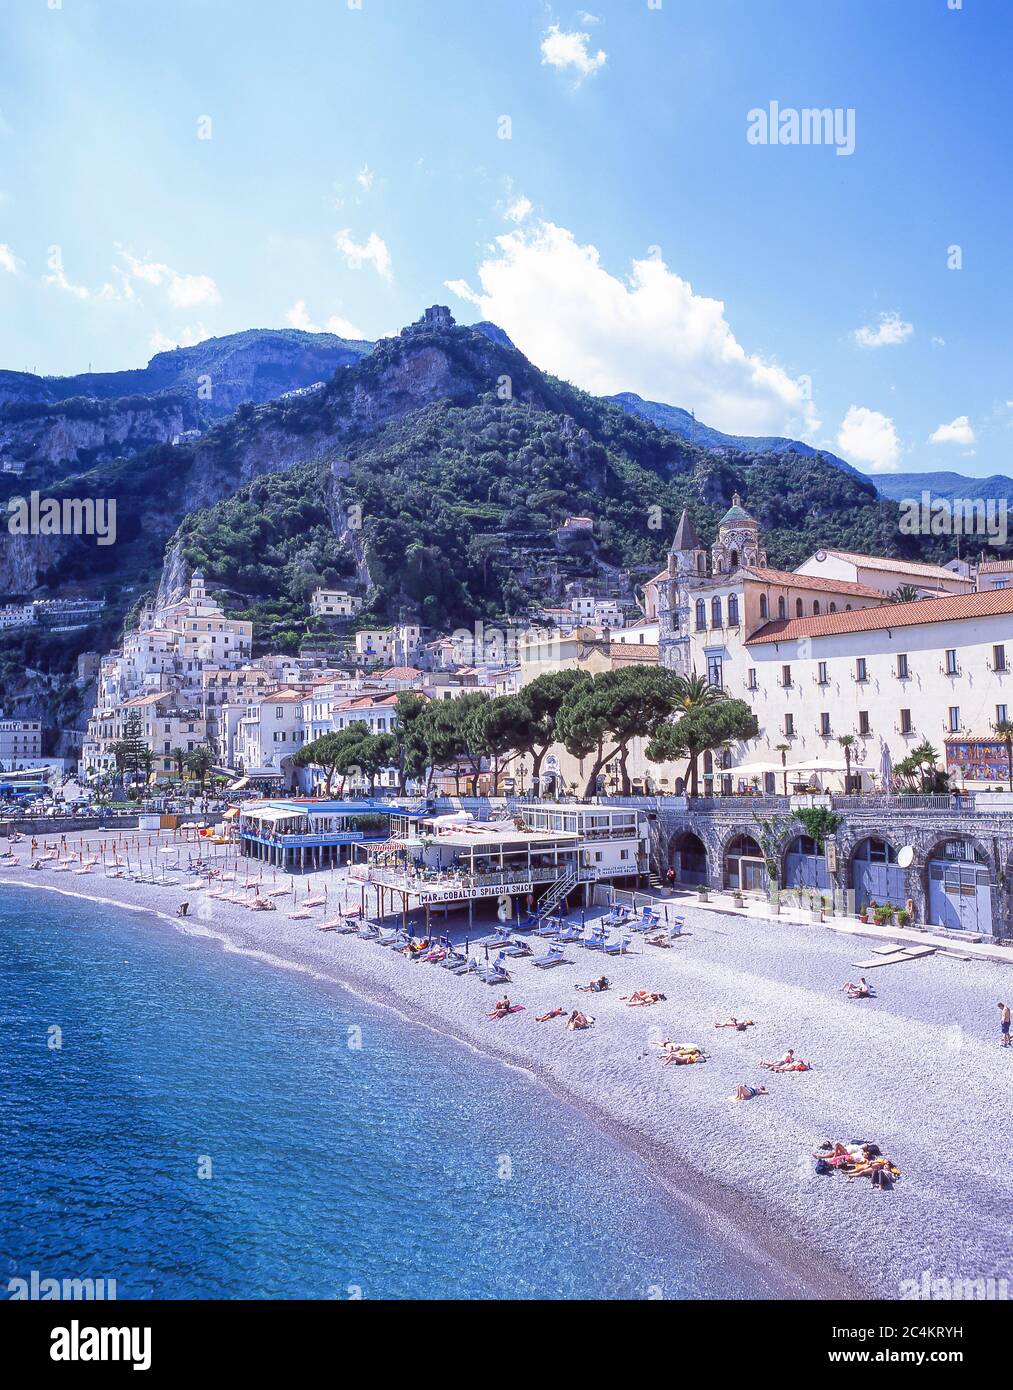 View of town and beach, Amalfi, Amalfi Coast, Province of Salerno, Campania Region, Italy Stock Photo